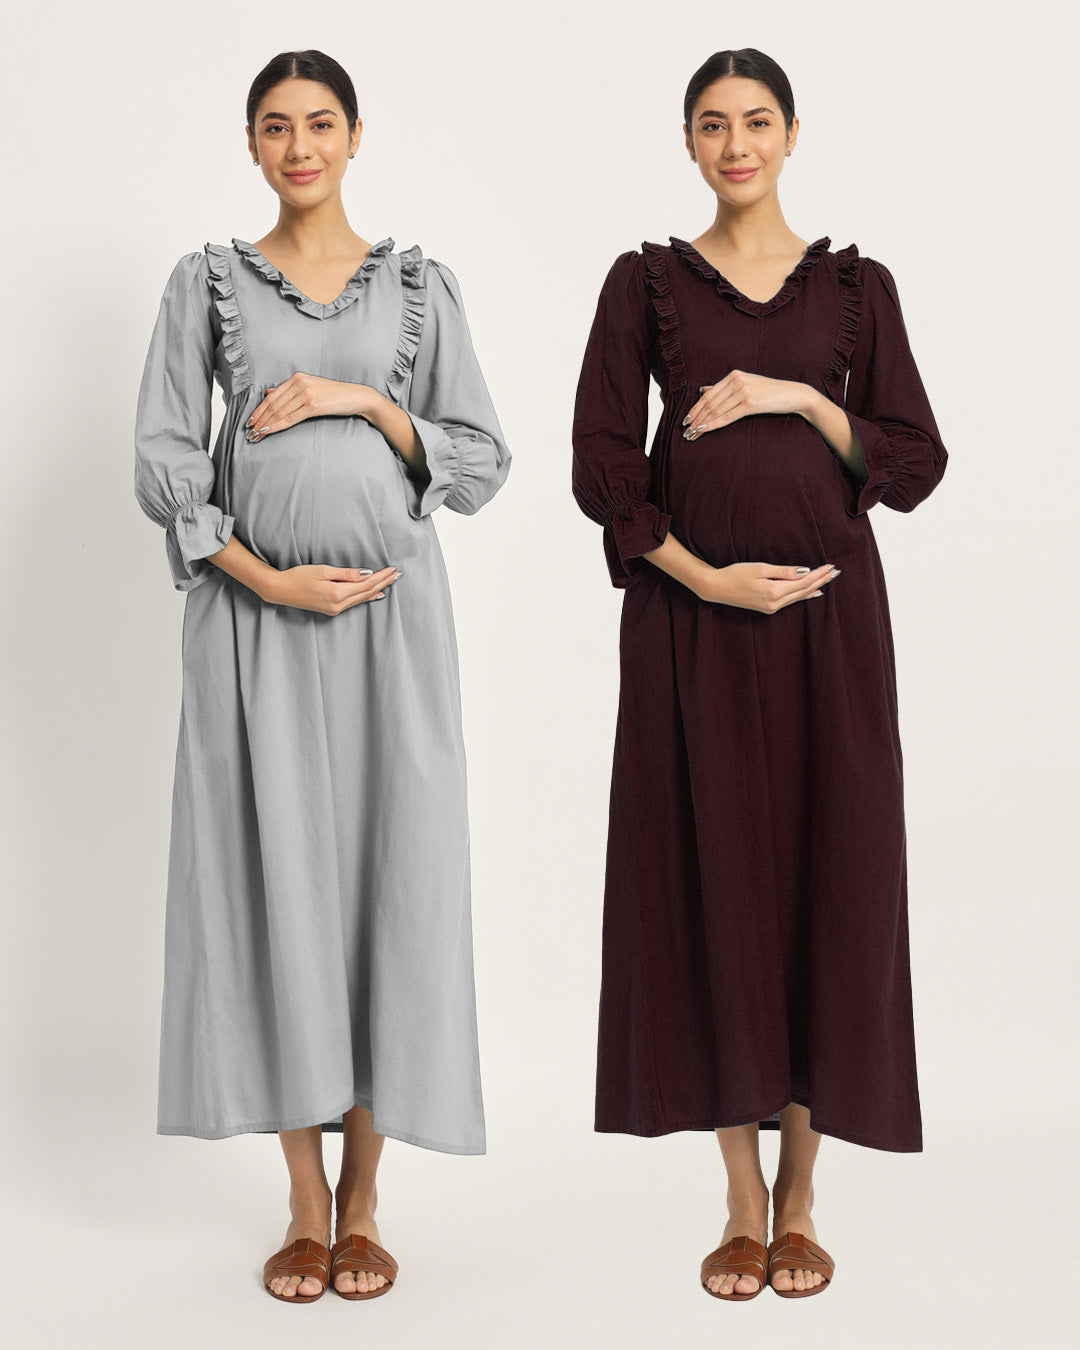 Combo: Iced Grey & Plum Passion Functional Flow Maternity & Nursing Dress - Set of 2